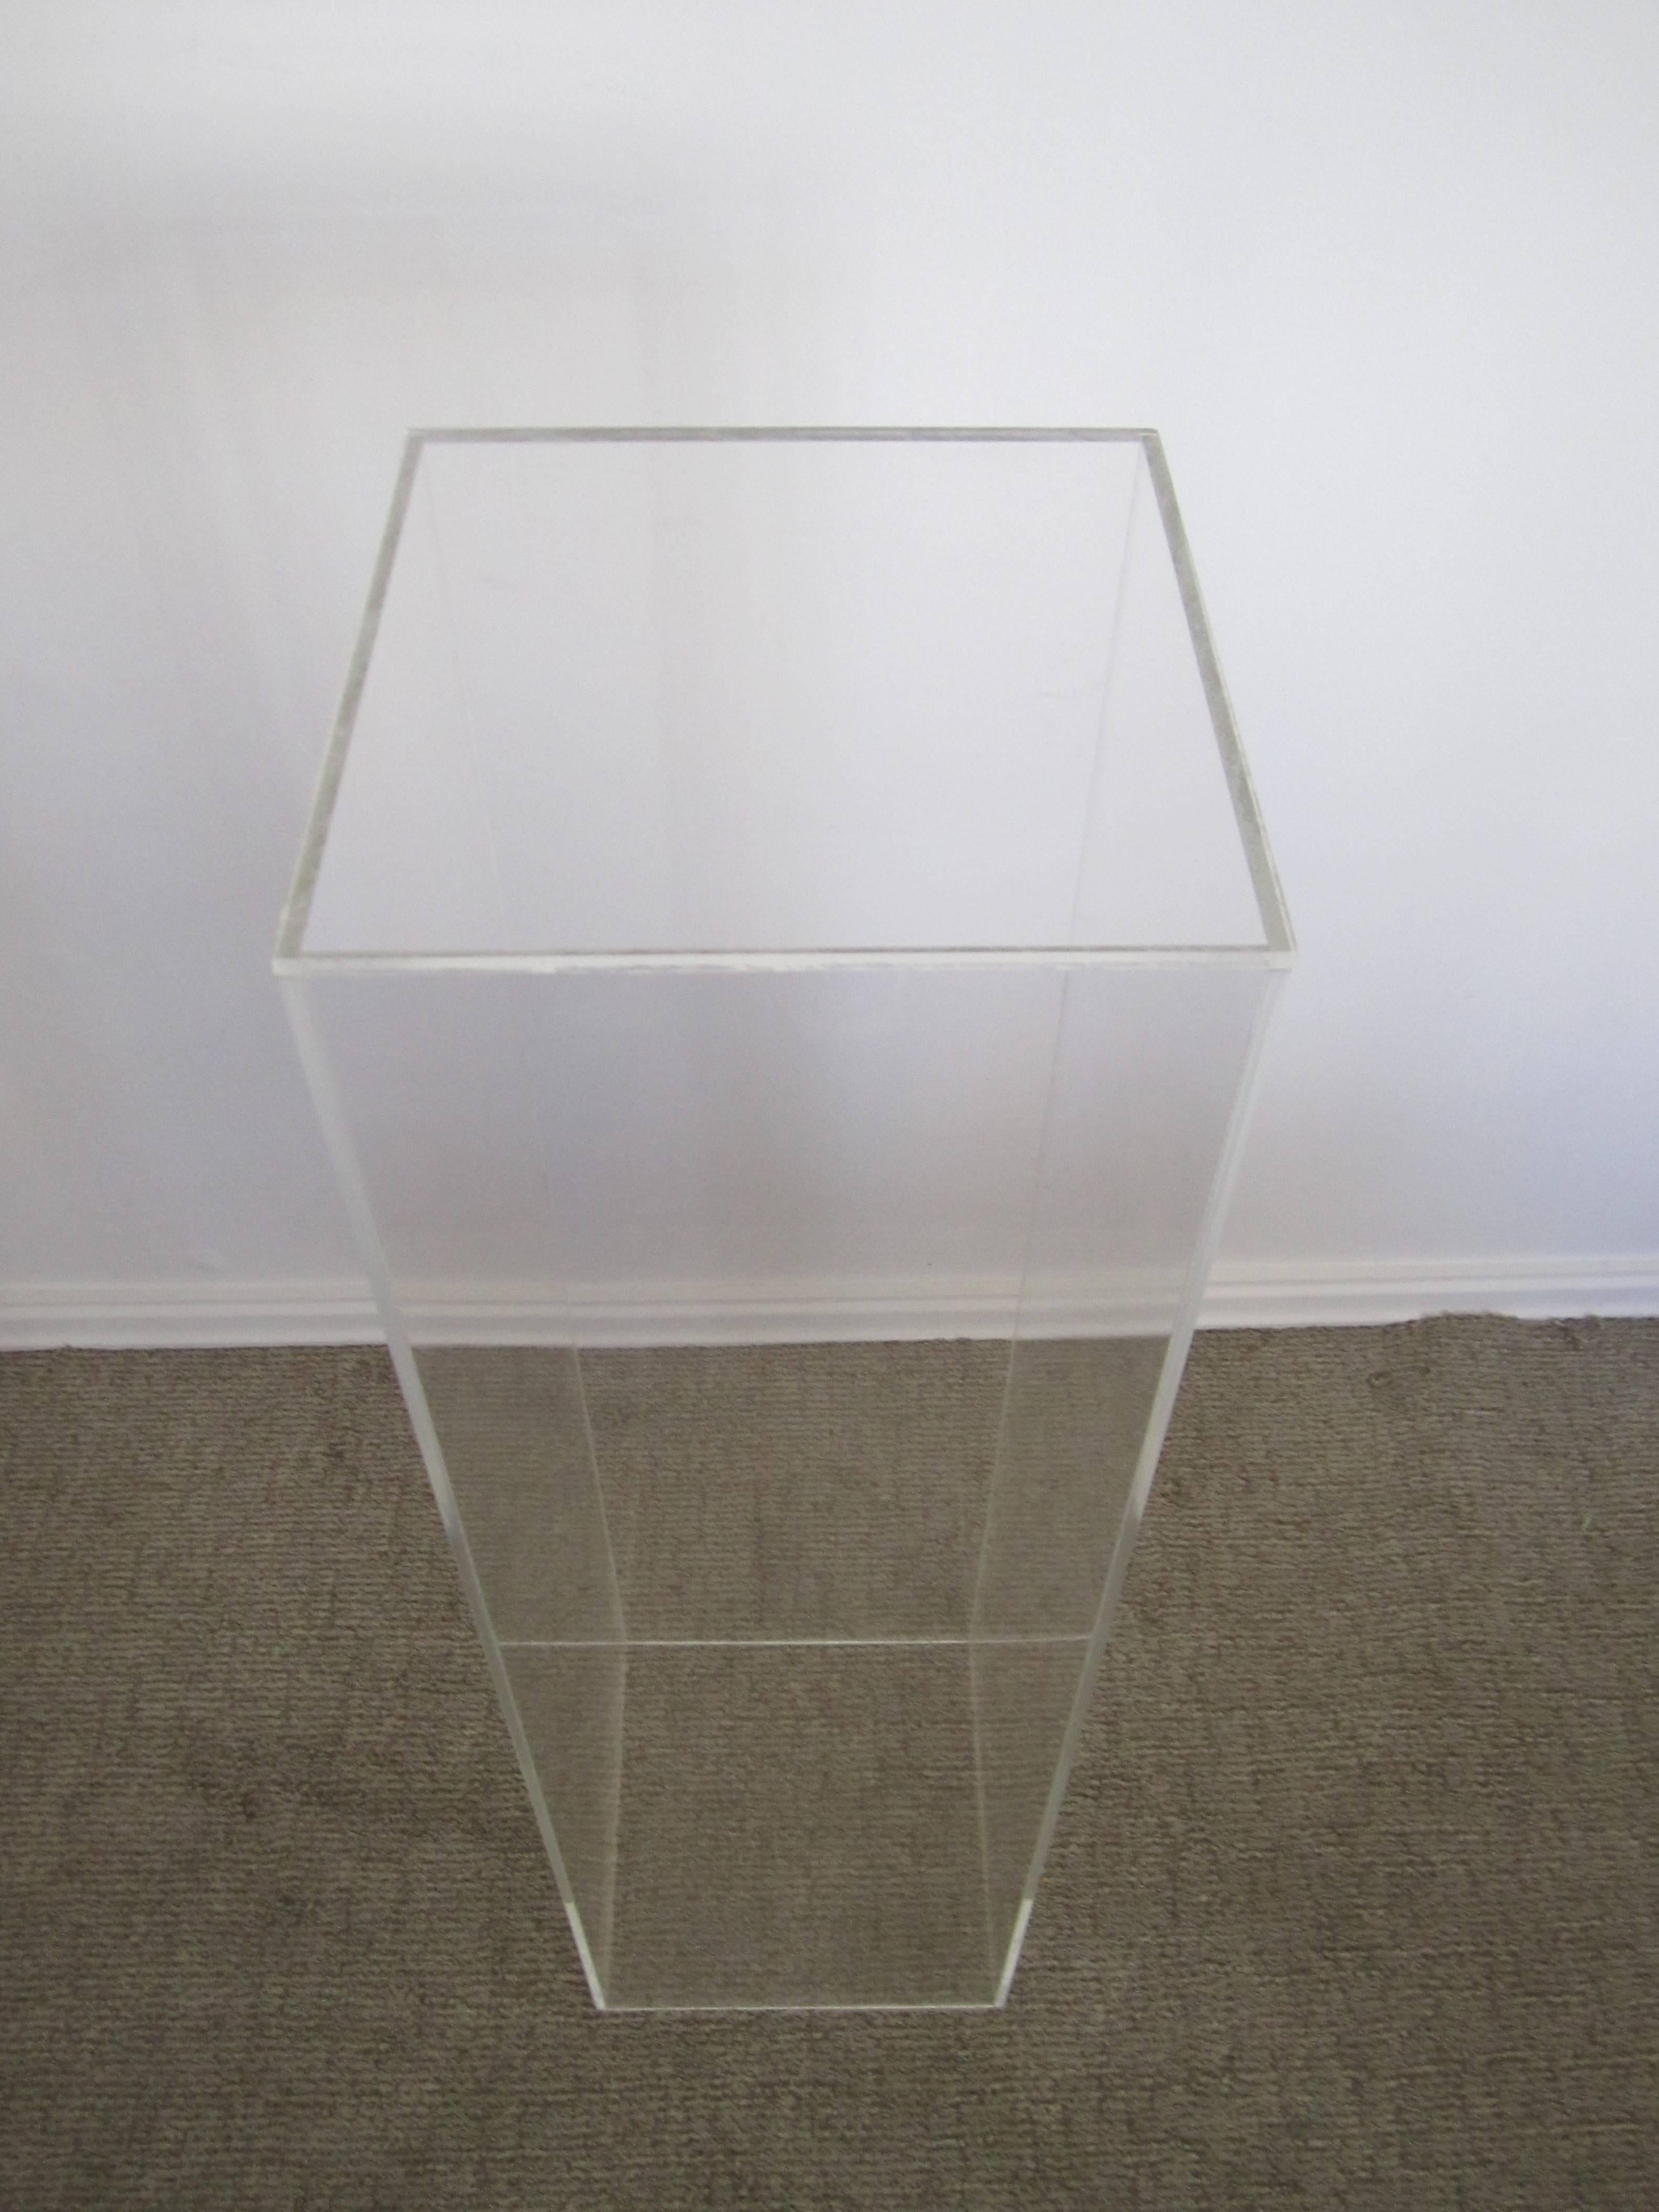 acrylic pedestal table